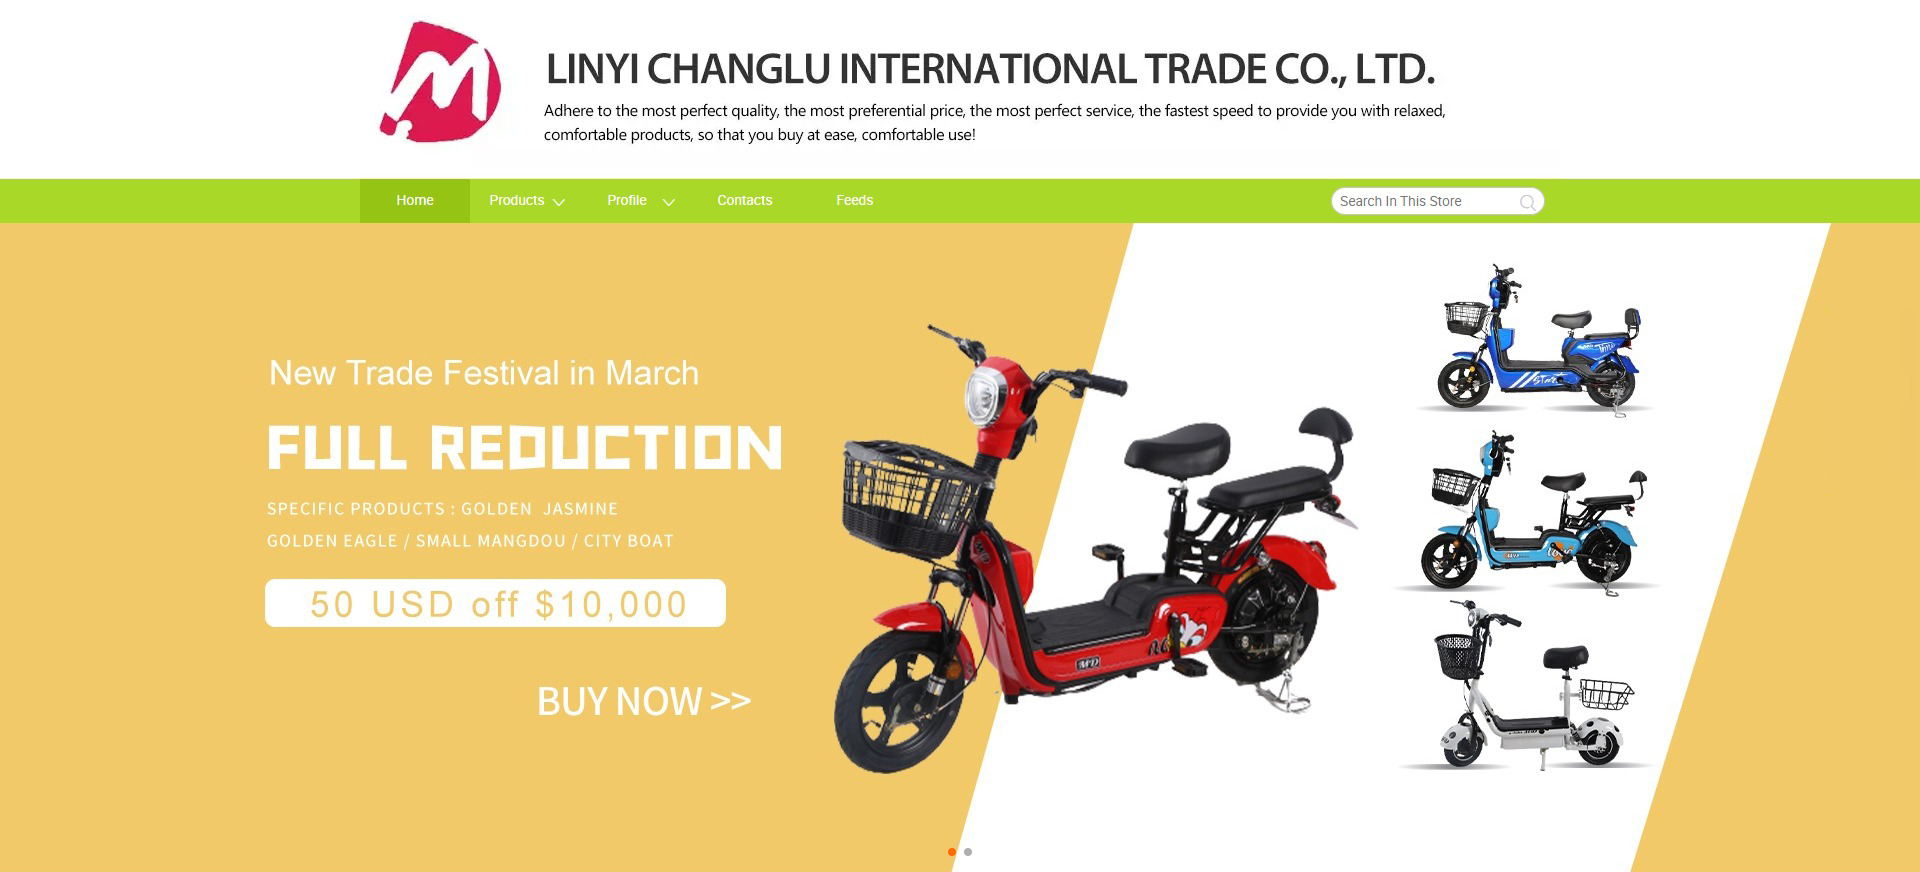 Linyi Changlu International Trade Co.